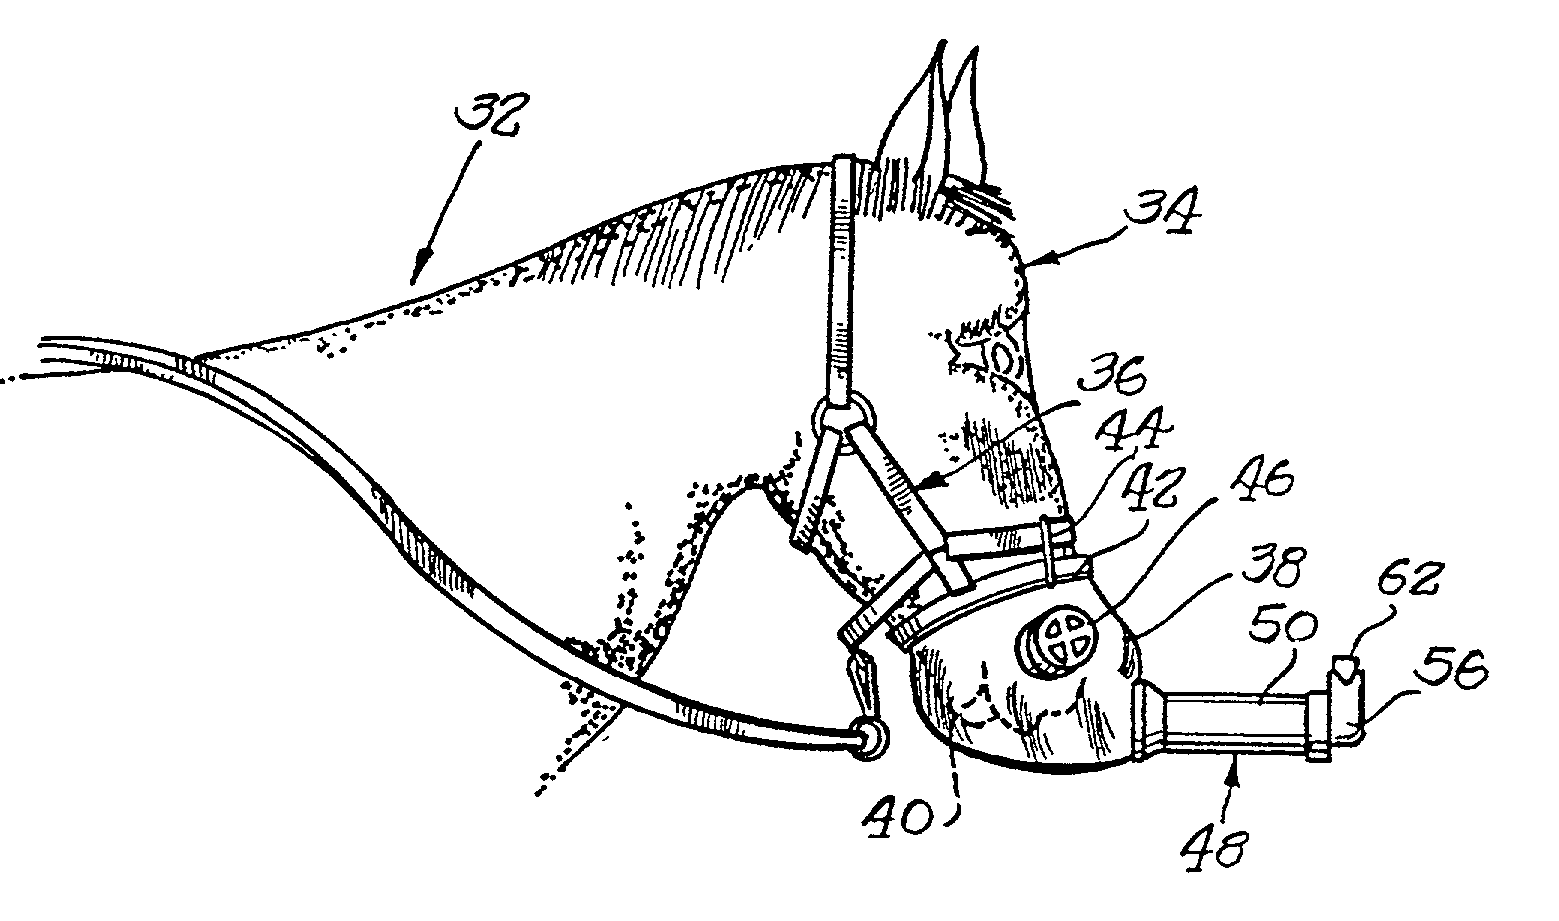 Equine mask